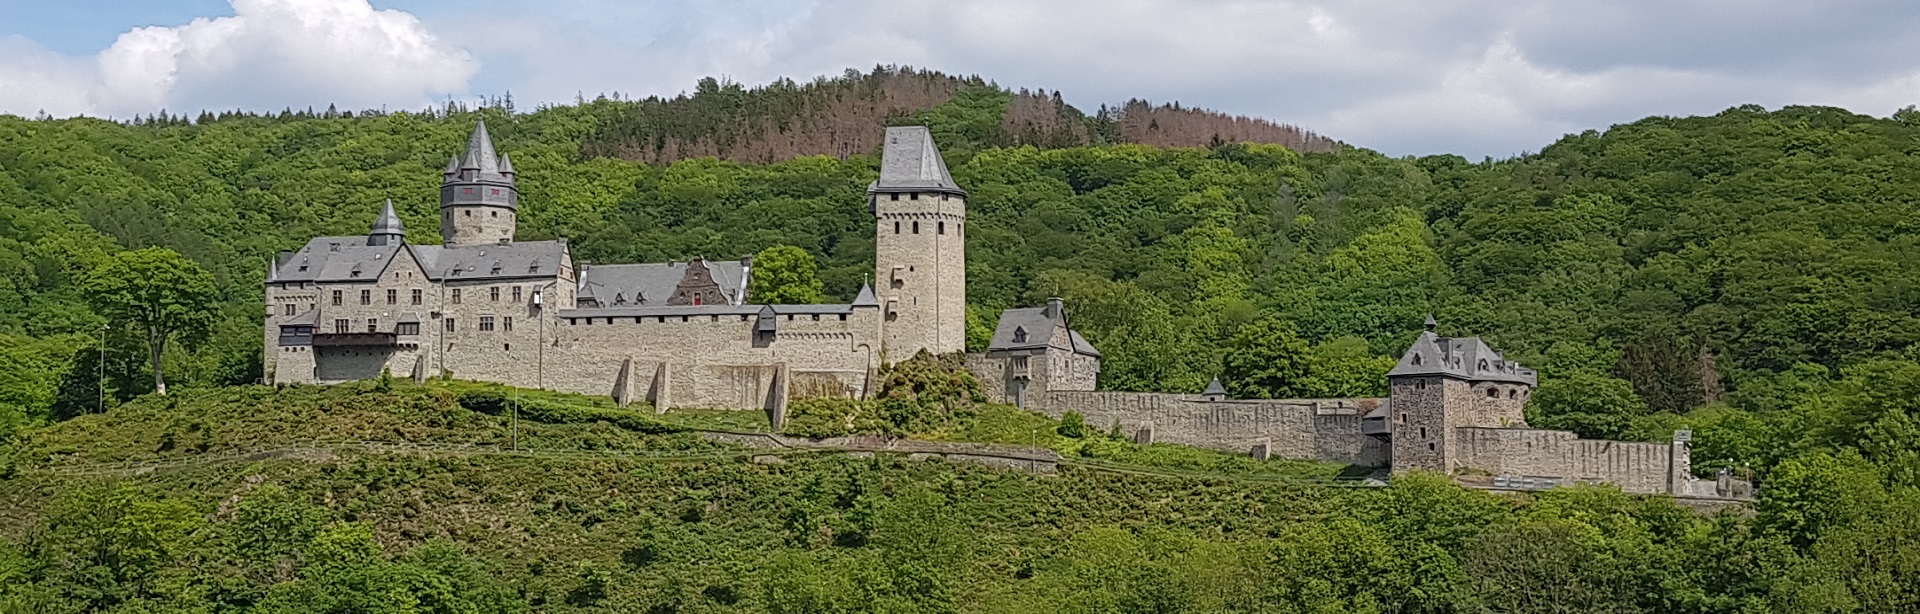 Burg Altena – Frühling